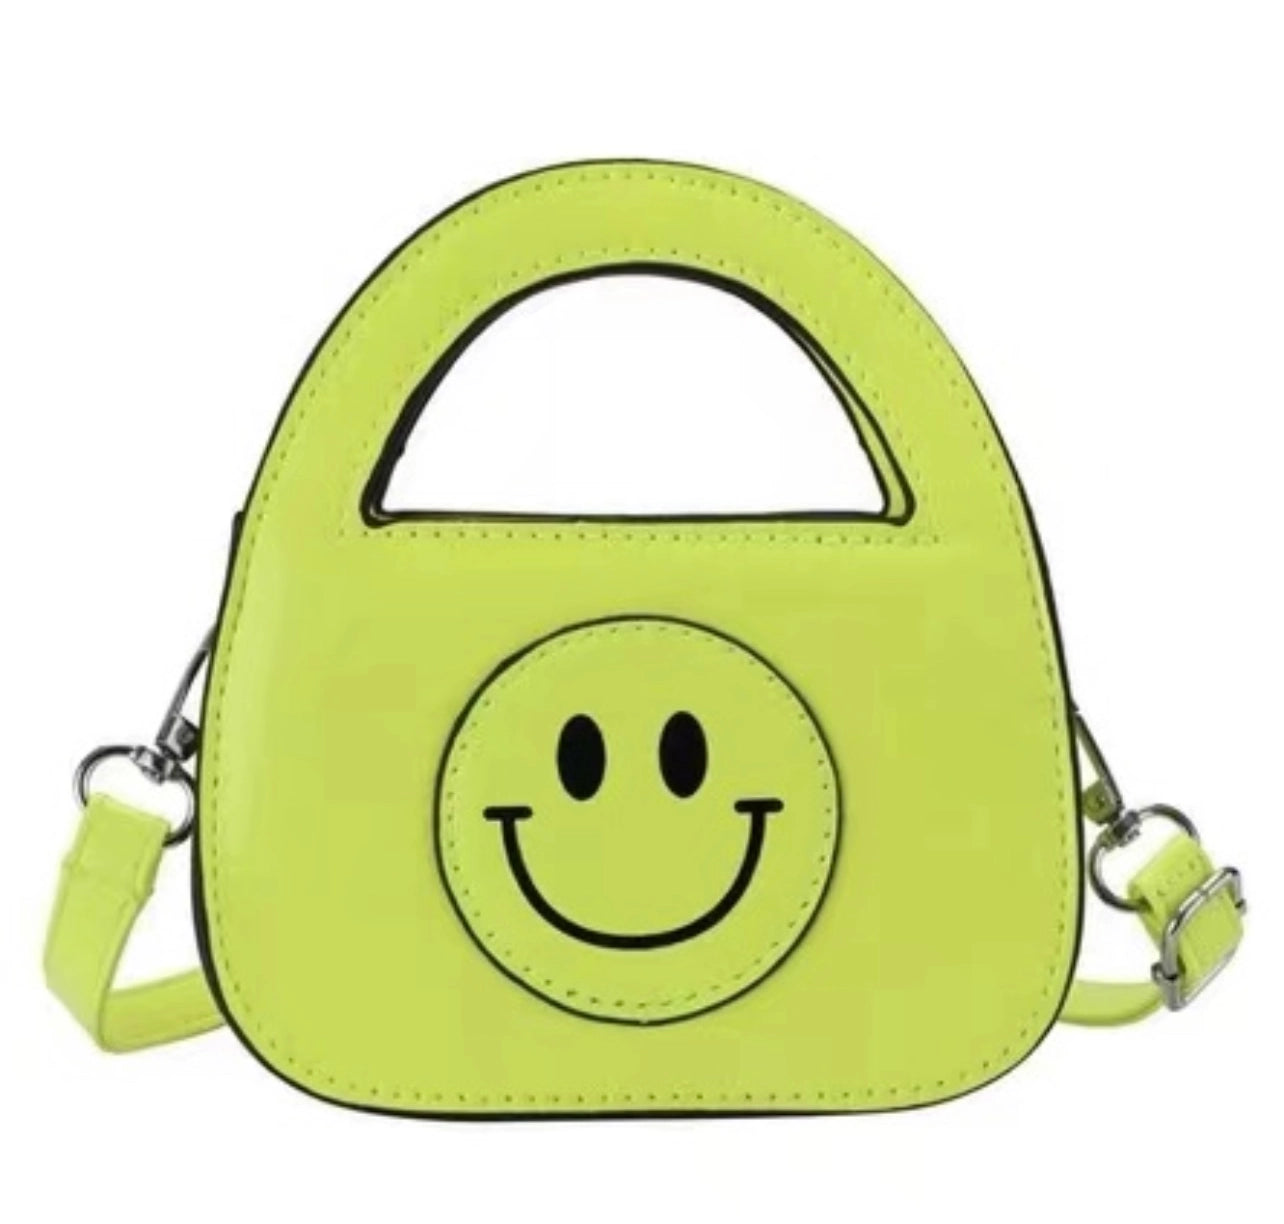 Smiley Face Fluff Bag | eBay